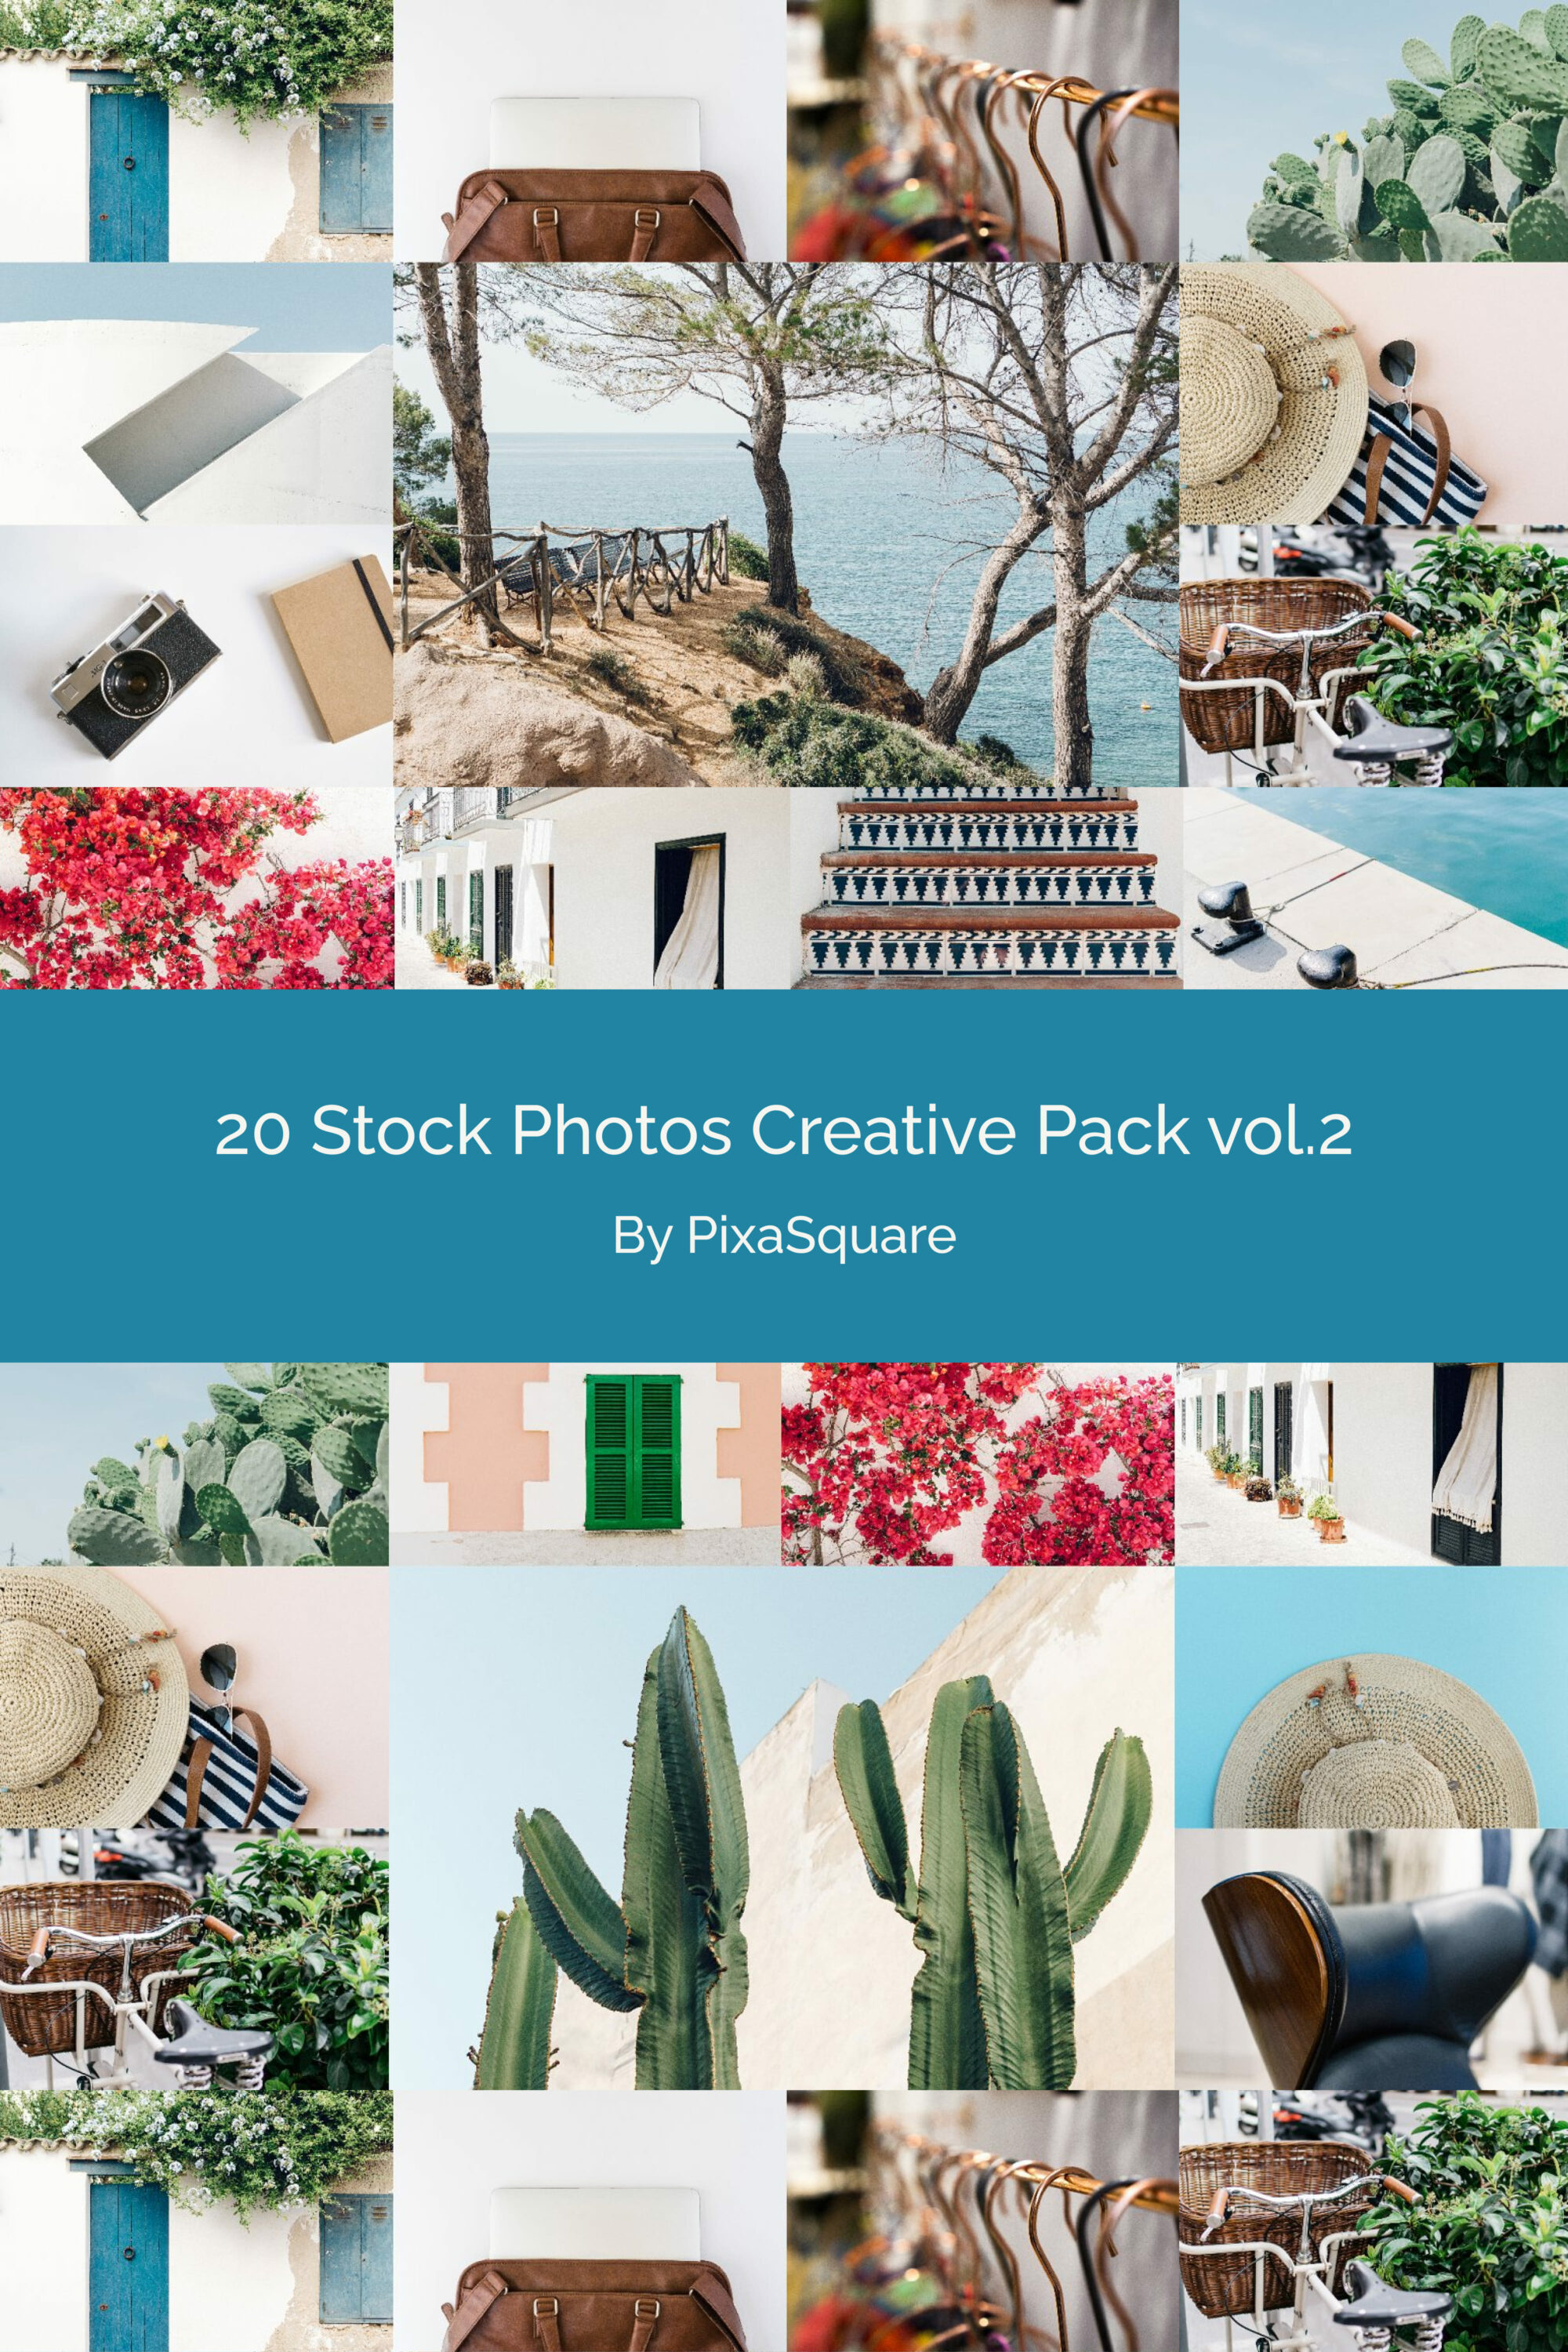 20 Stock Photos Creative Pack vol.2 - Pinterest.